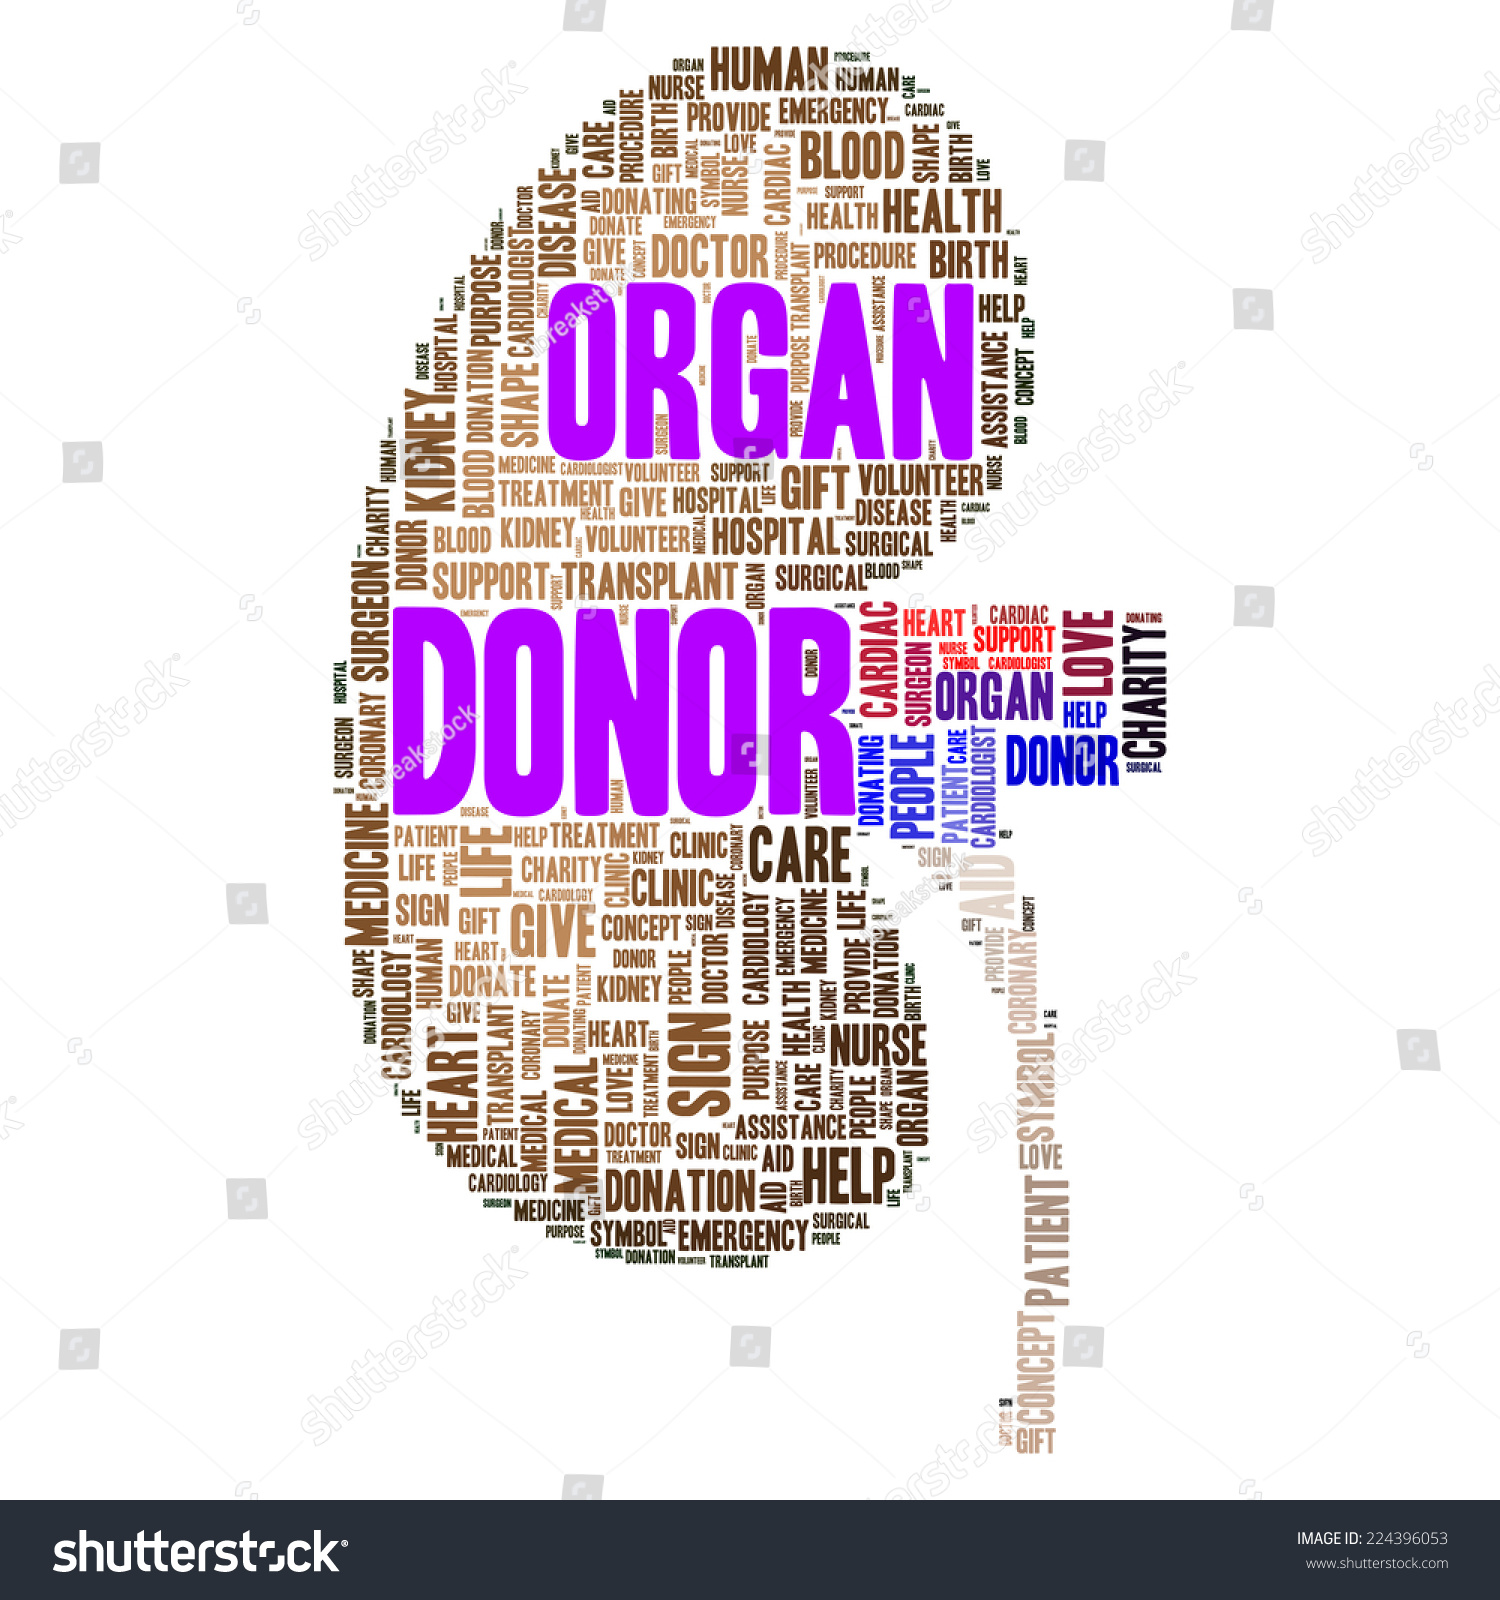 organ donation clipart - photo #9